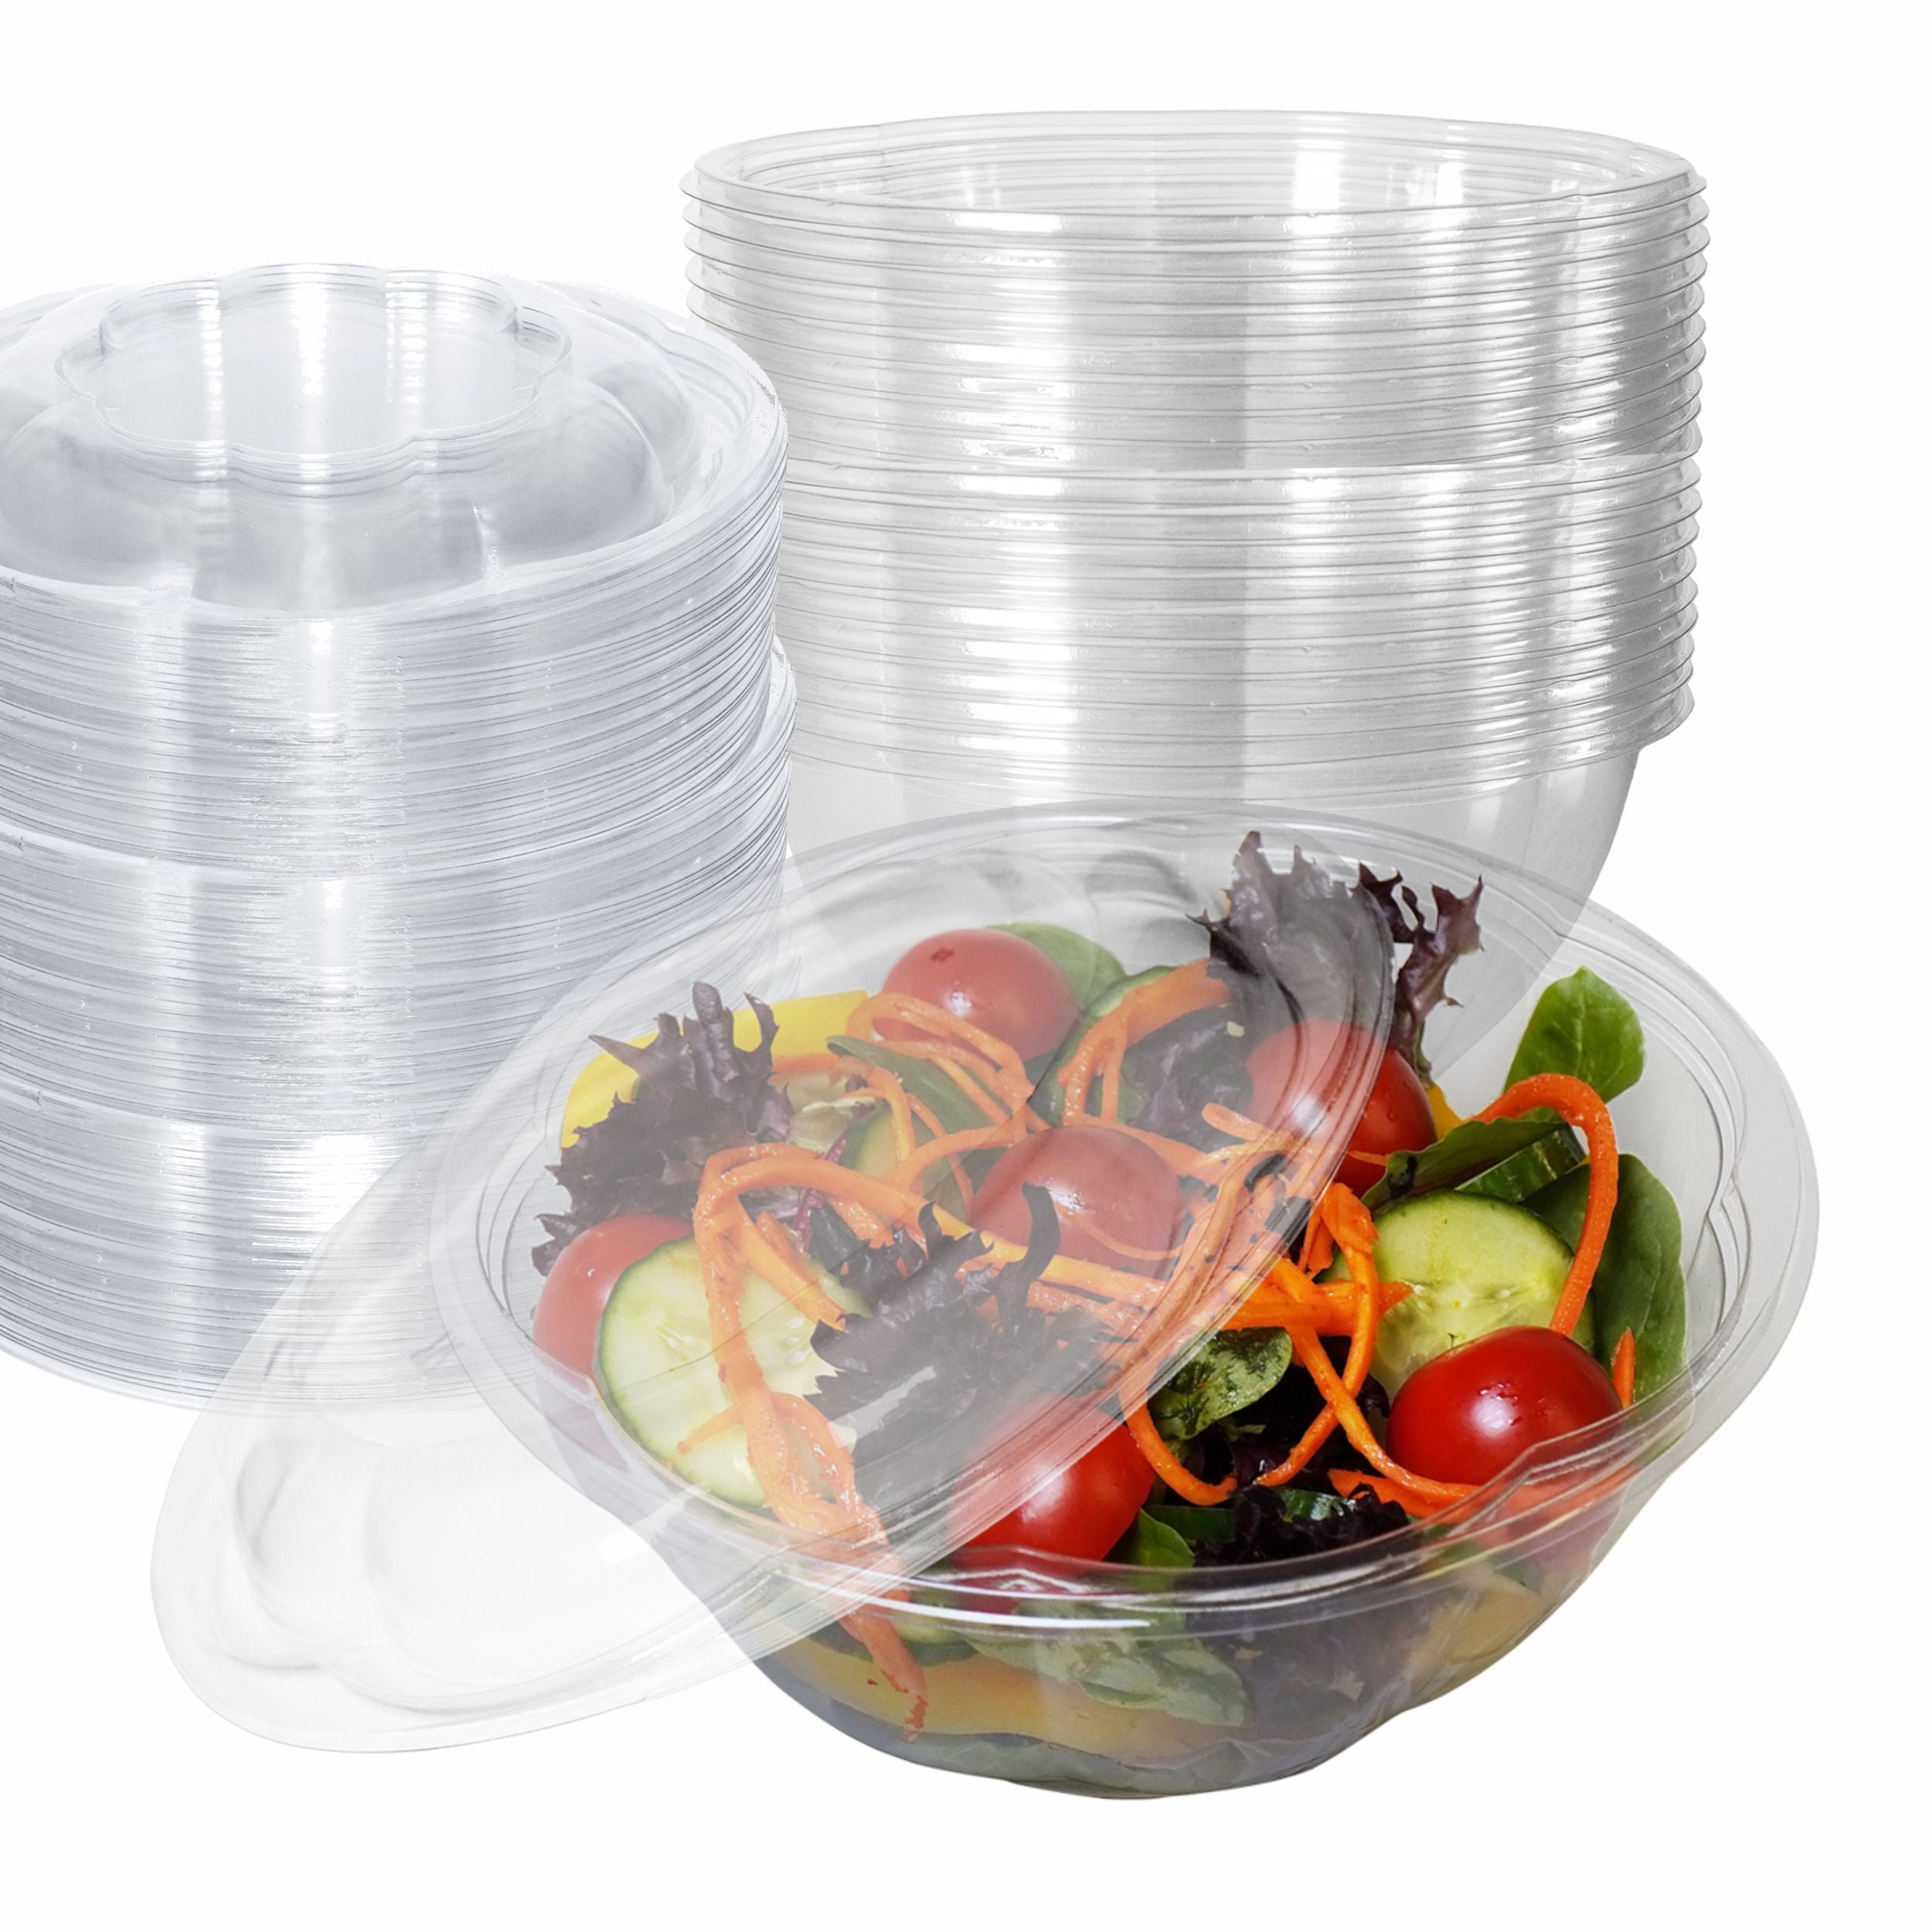 50/100/200x Disposable Plastic Wrap Food Storage Covers Fresh Kitchen Seal F4k0, Size: Tile diameter40 cm, Clear